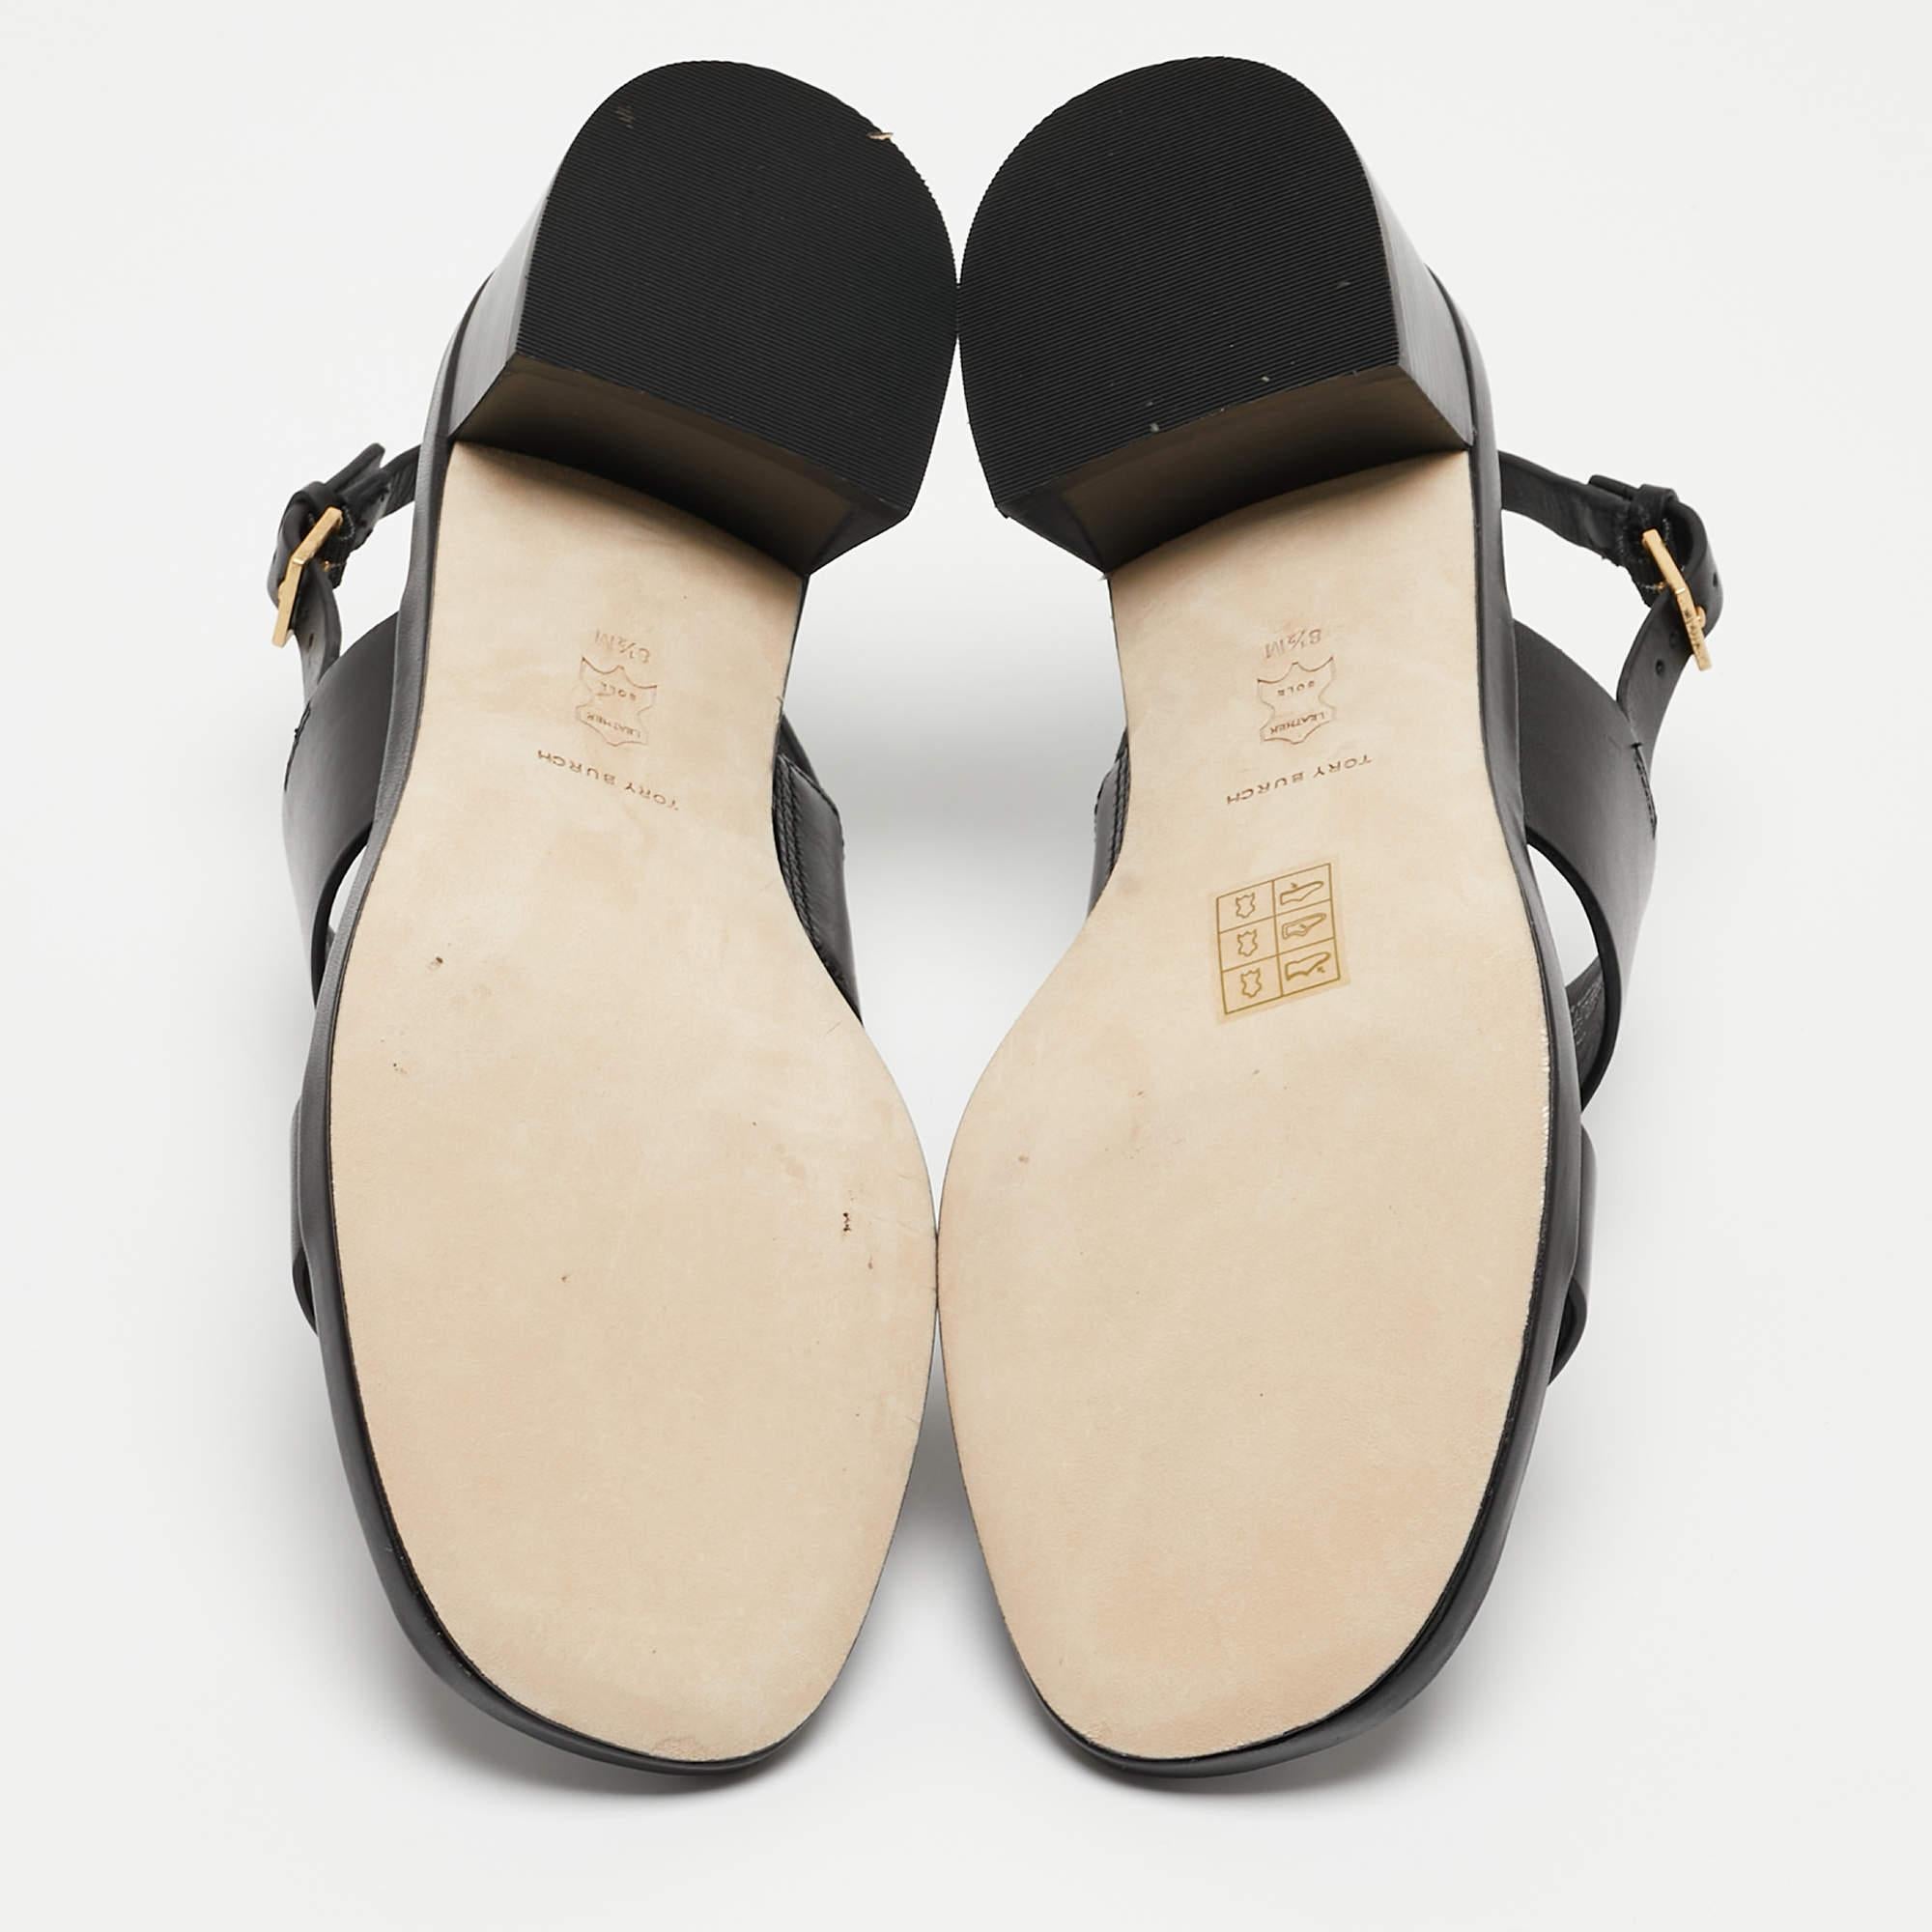 Tory Burch Black Leather Eleanor Slingback Sandals Size 39 1